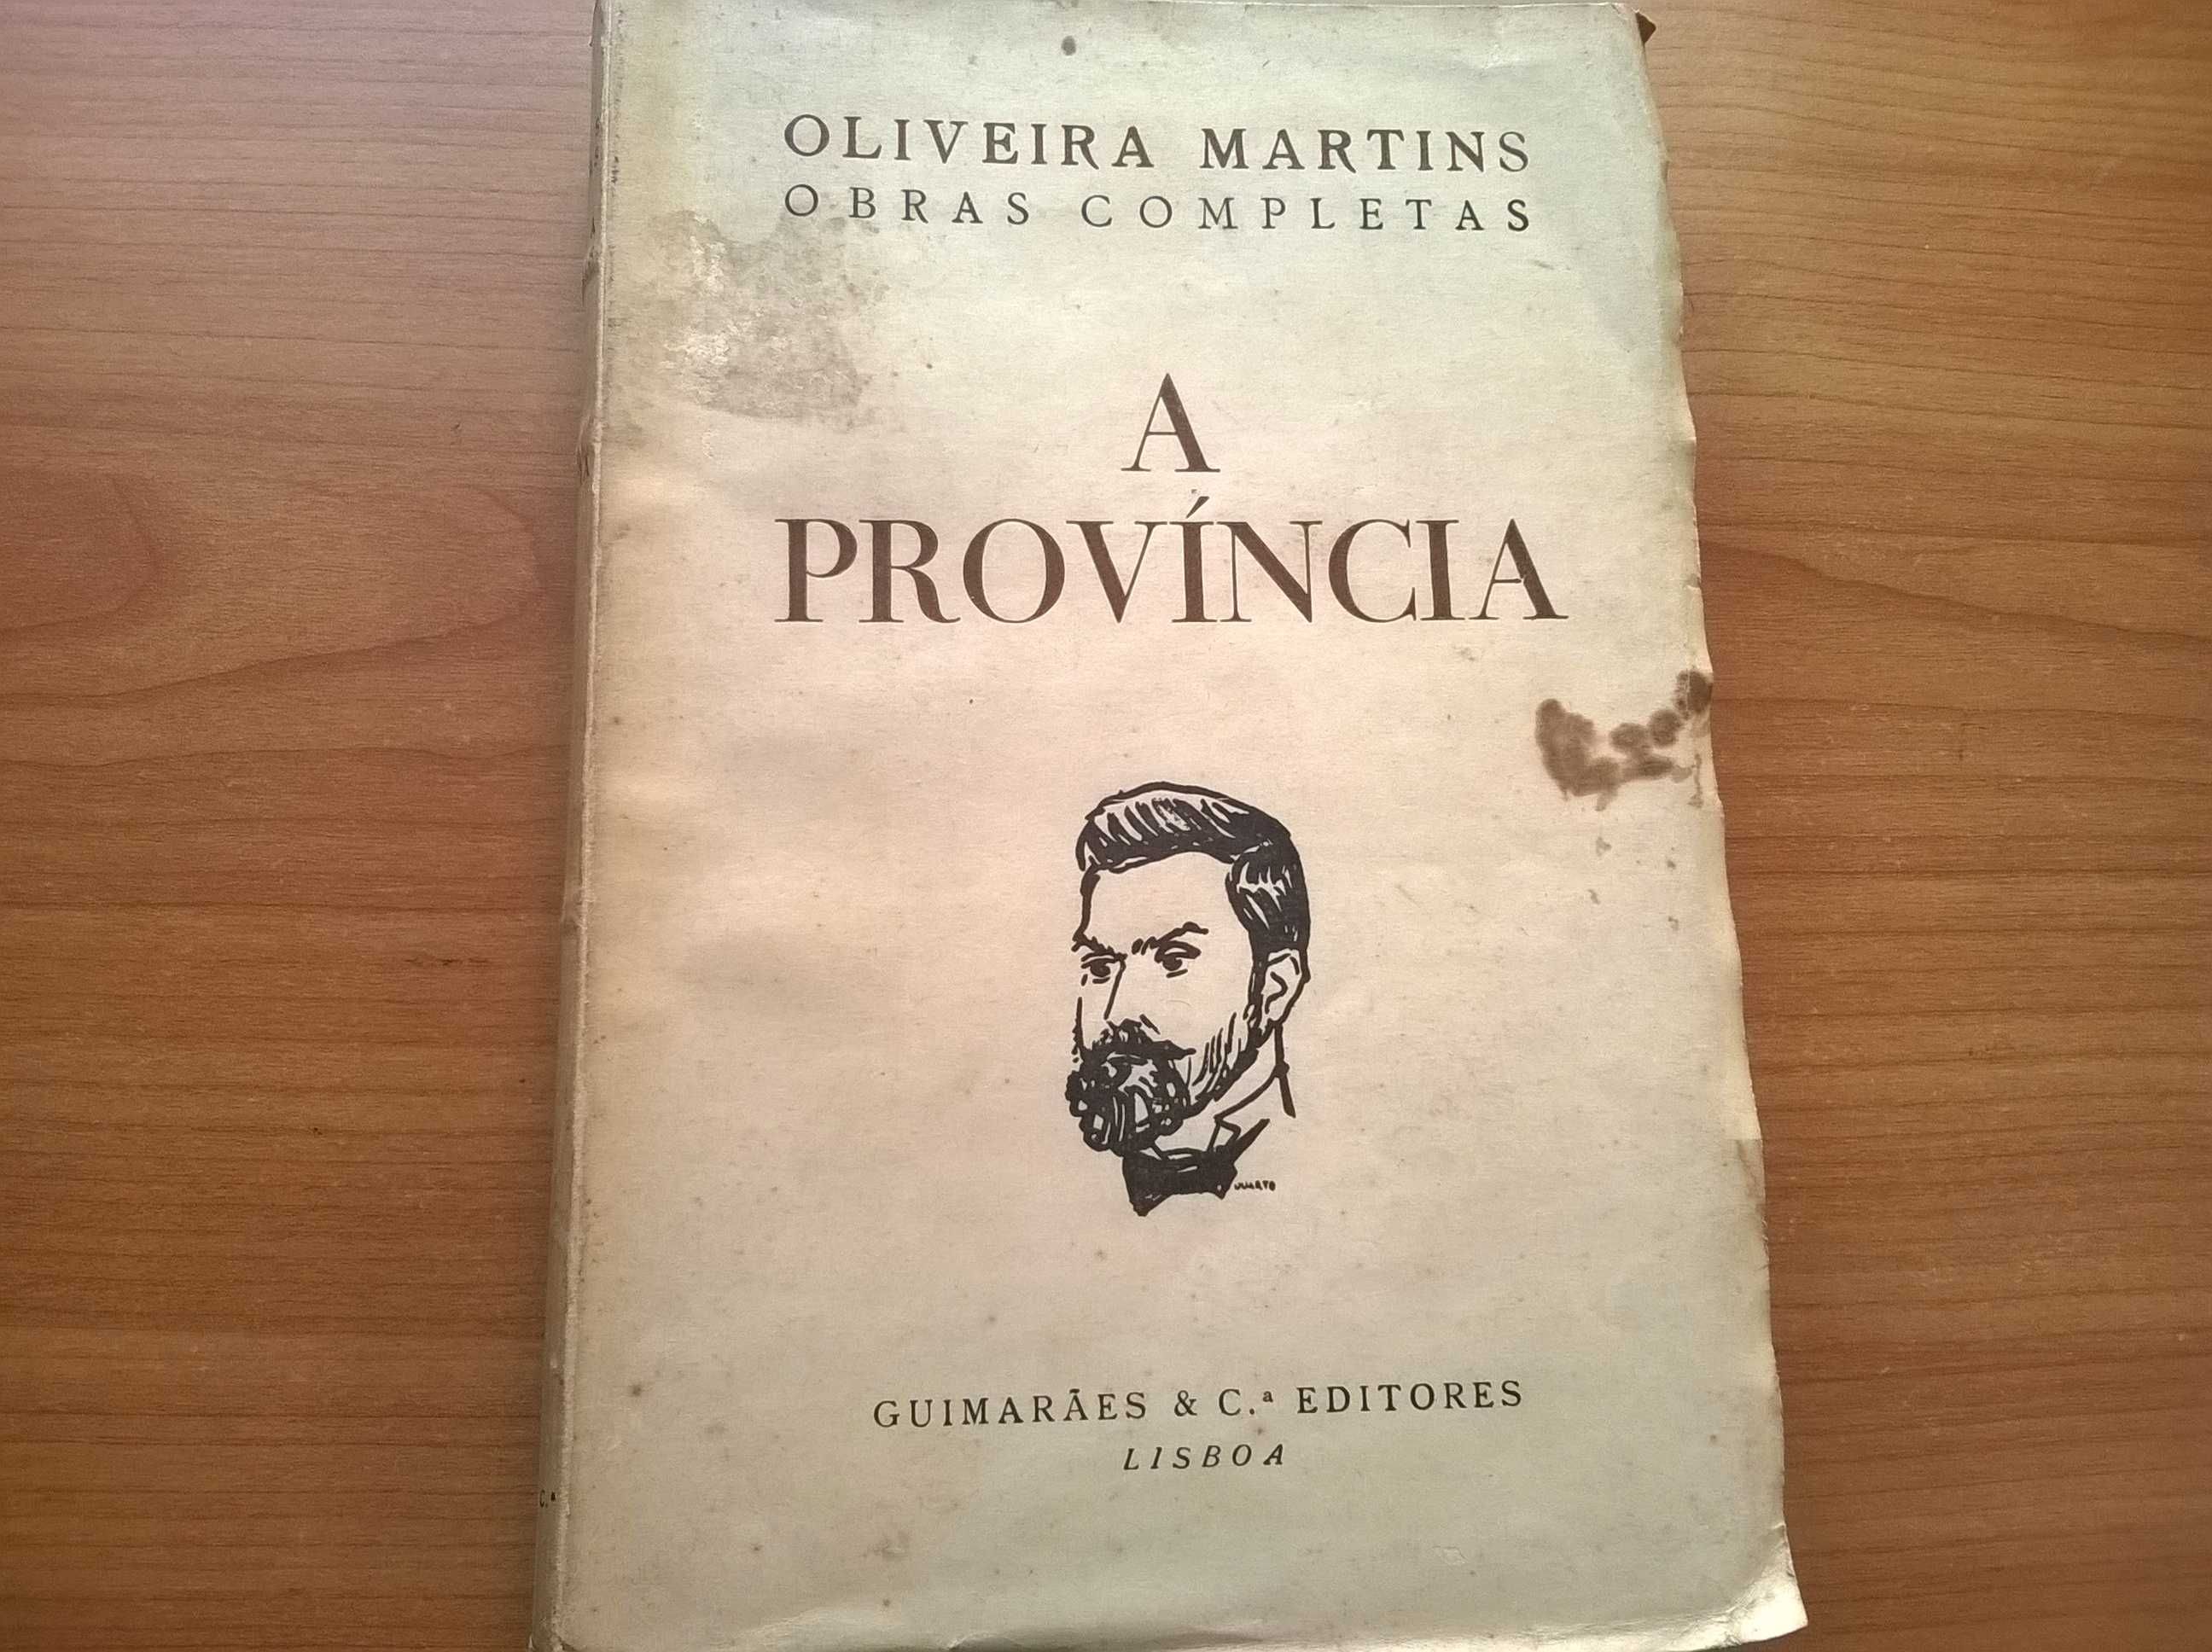 " A Província " II - J. P. Oliveira Martins